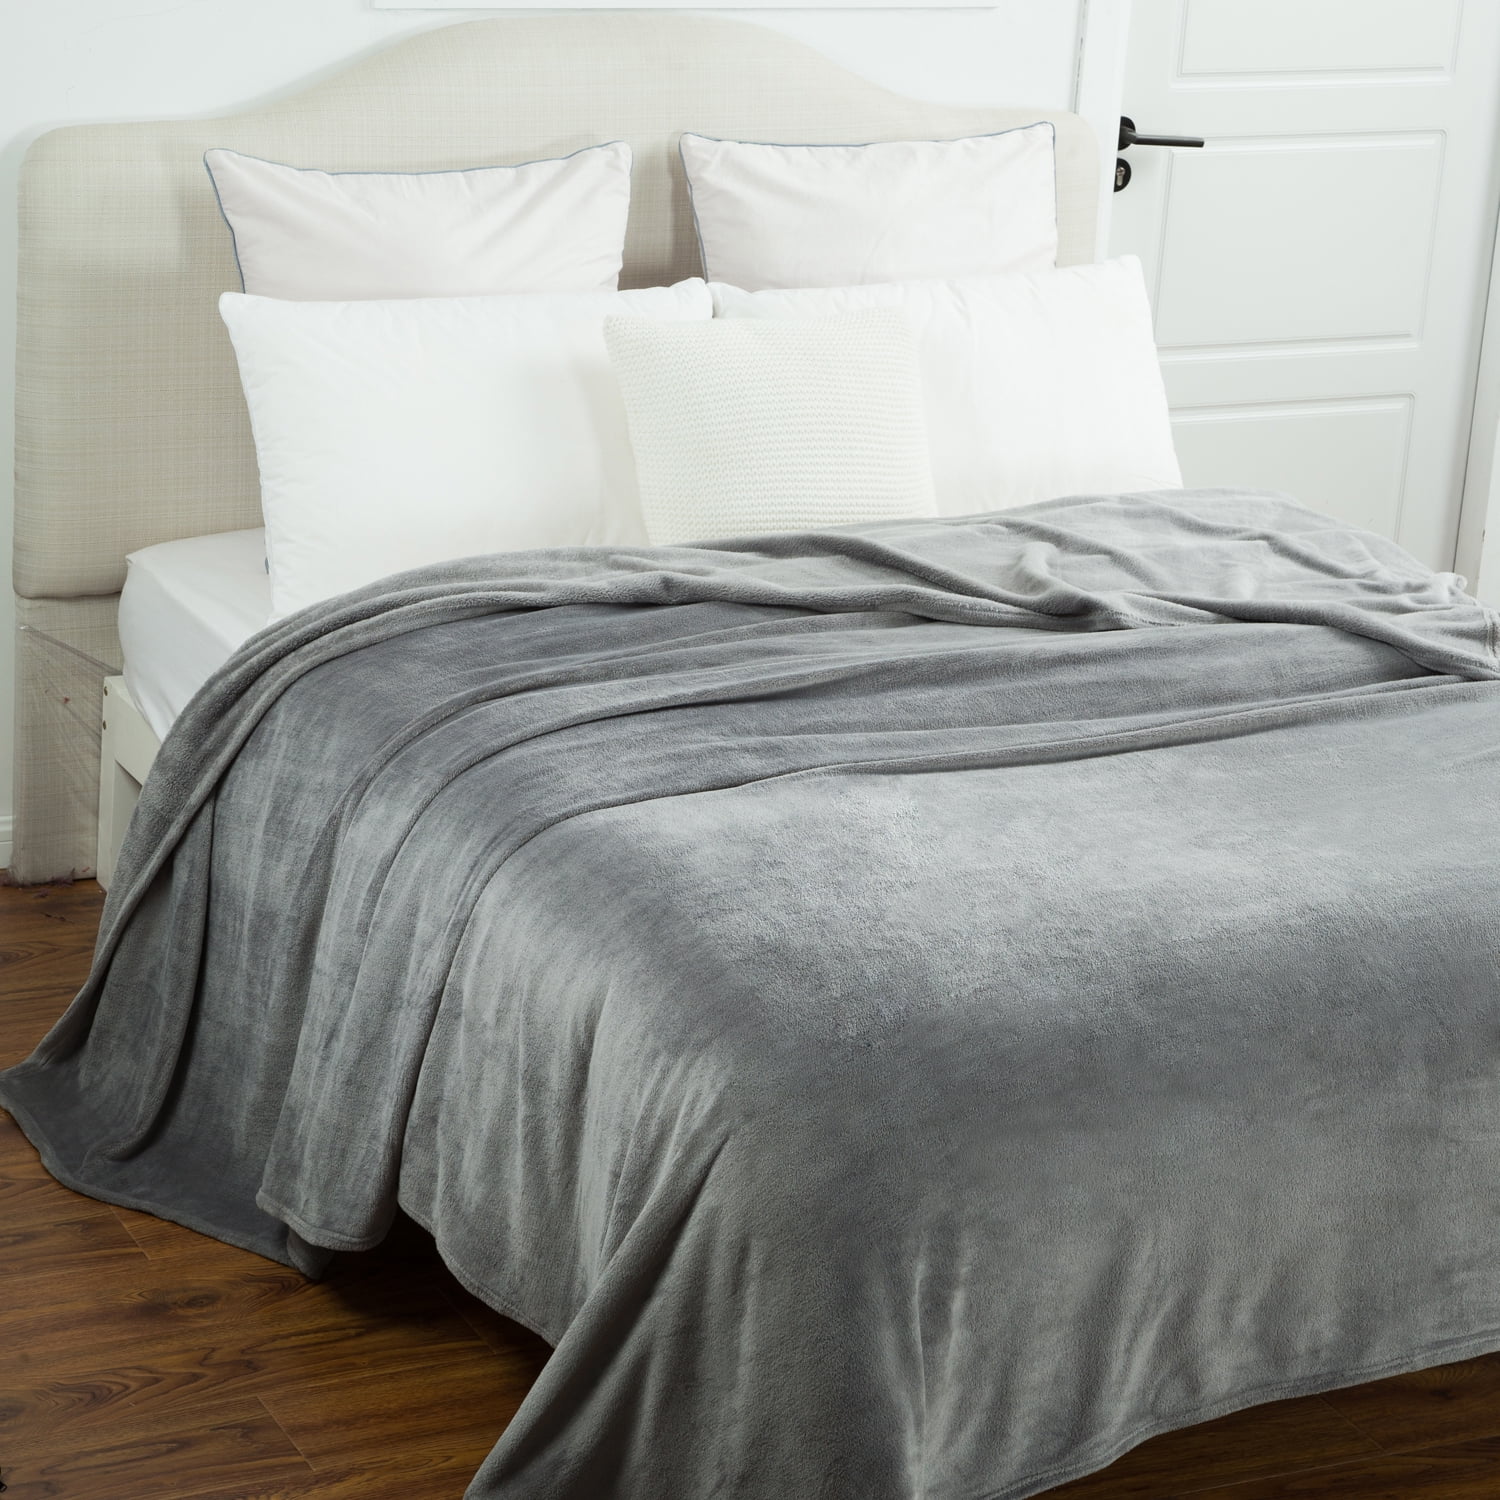 EHEYCIGA Fleece Blanket Twin Size Flannel Blanket Couch Grey Microfiber Soft Cozy Lightweight Luxury Bed Blanket 